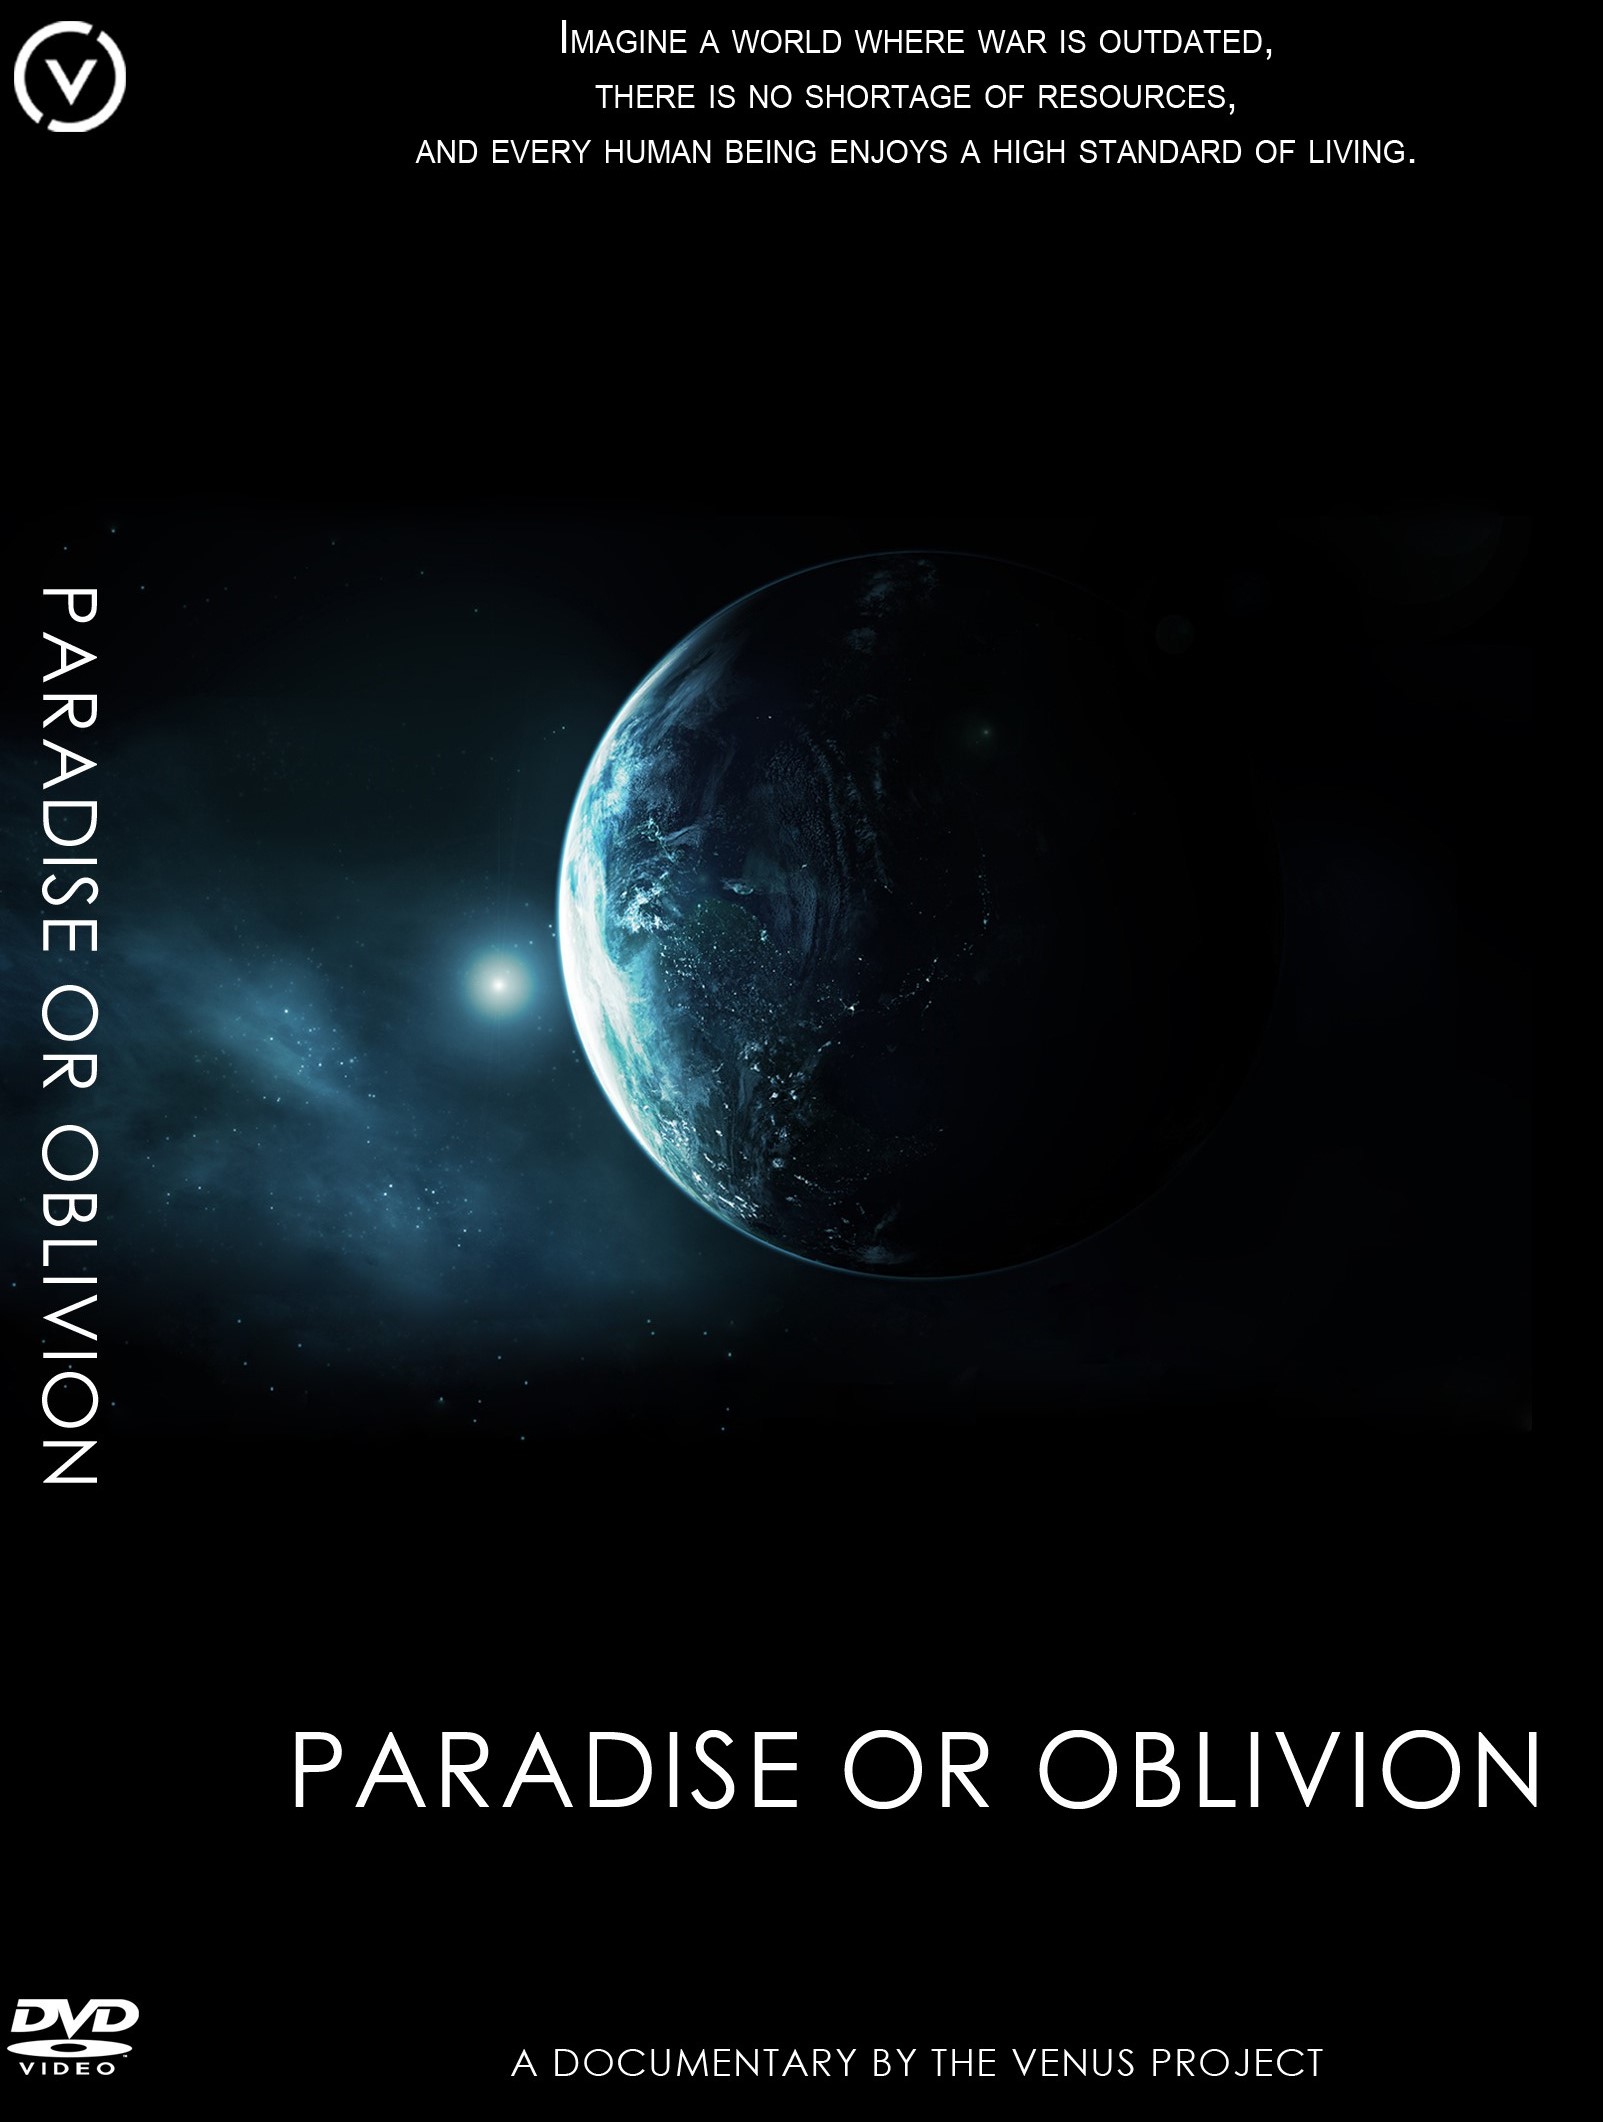 Paradise or Oblivion Full Documentary